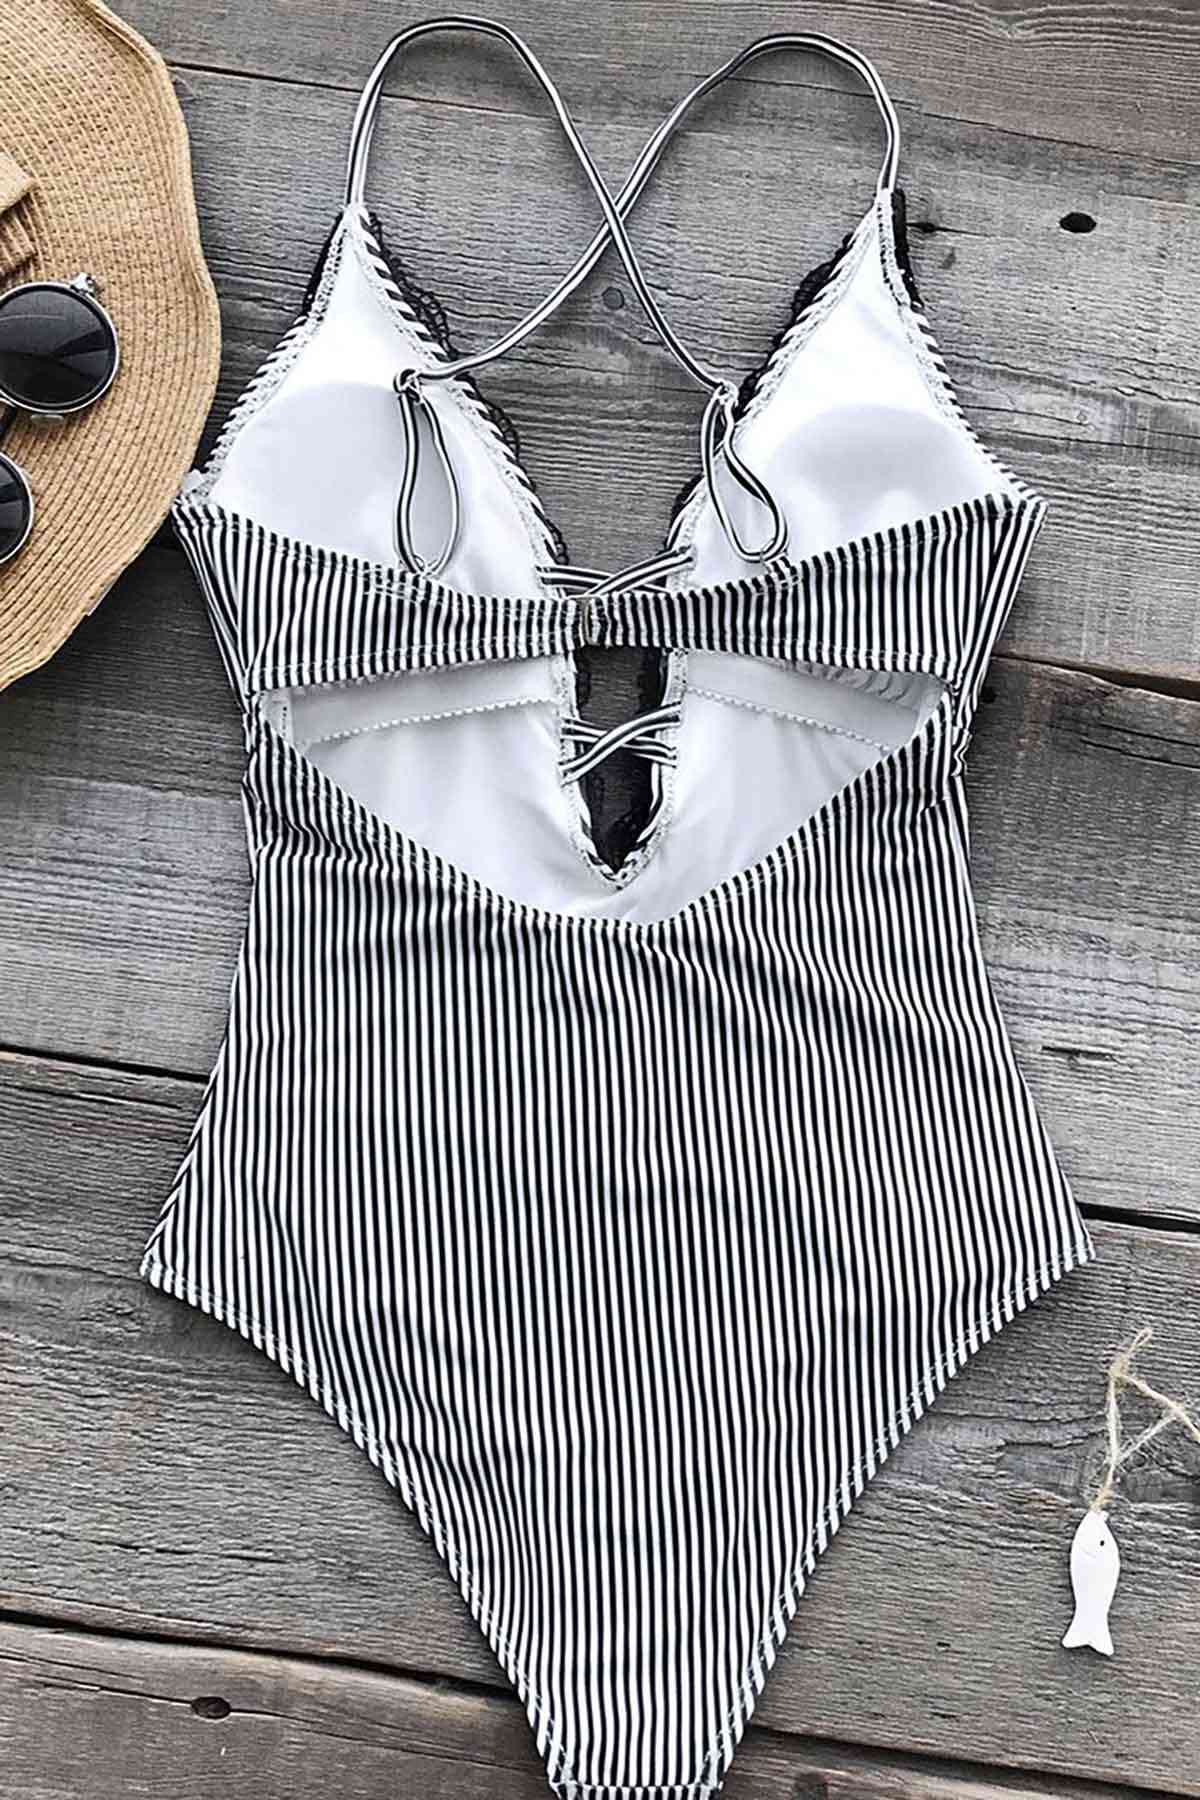 Lace Detail Black White Swimsuit